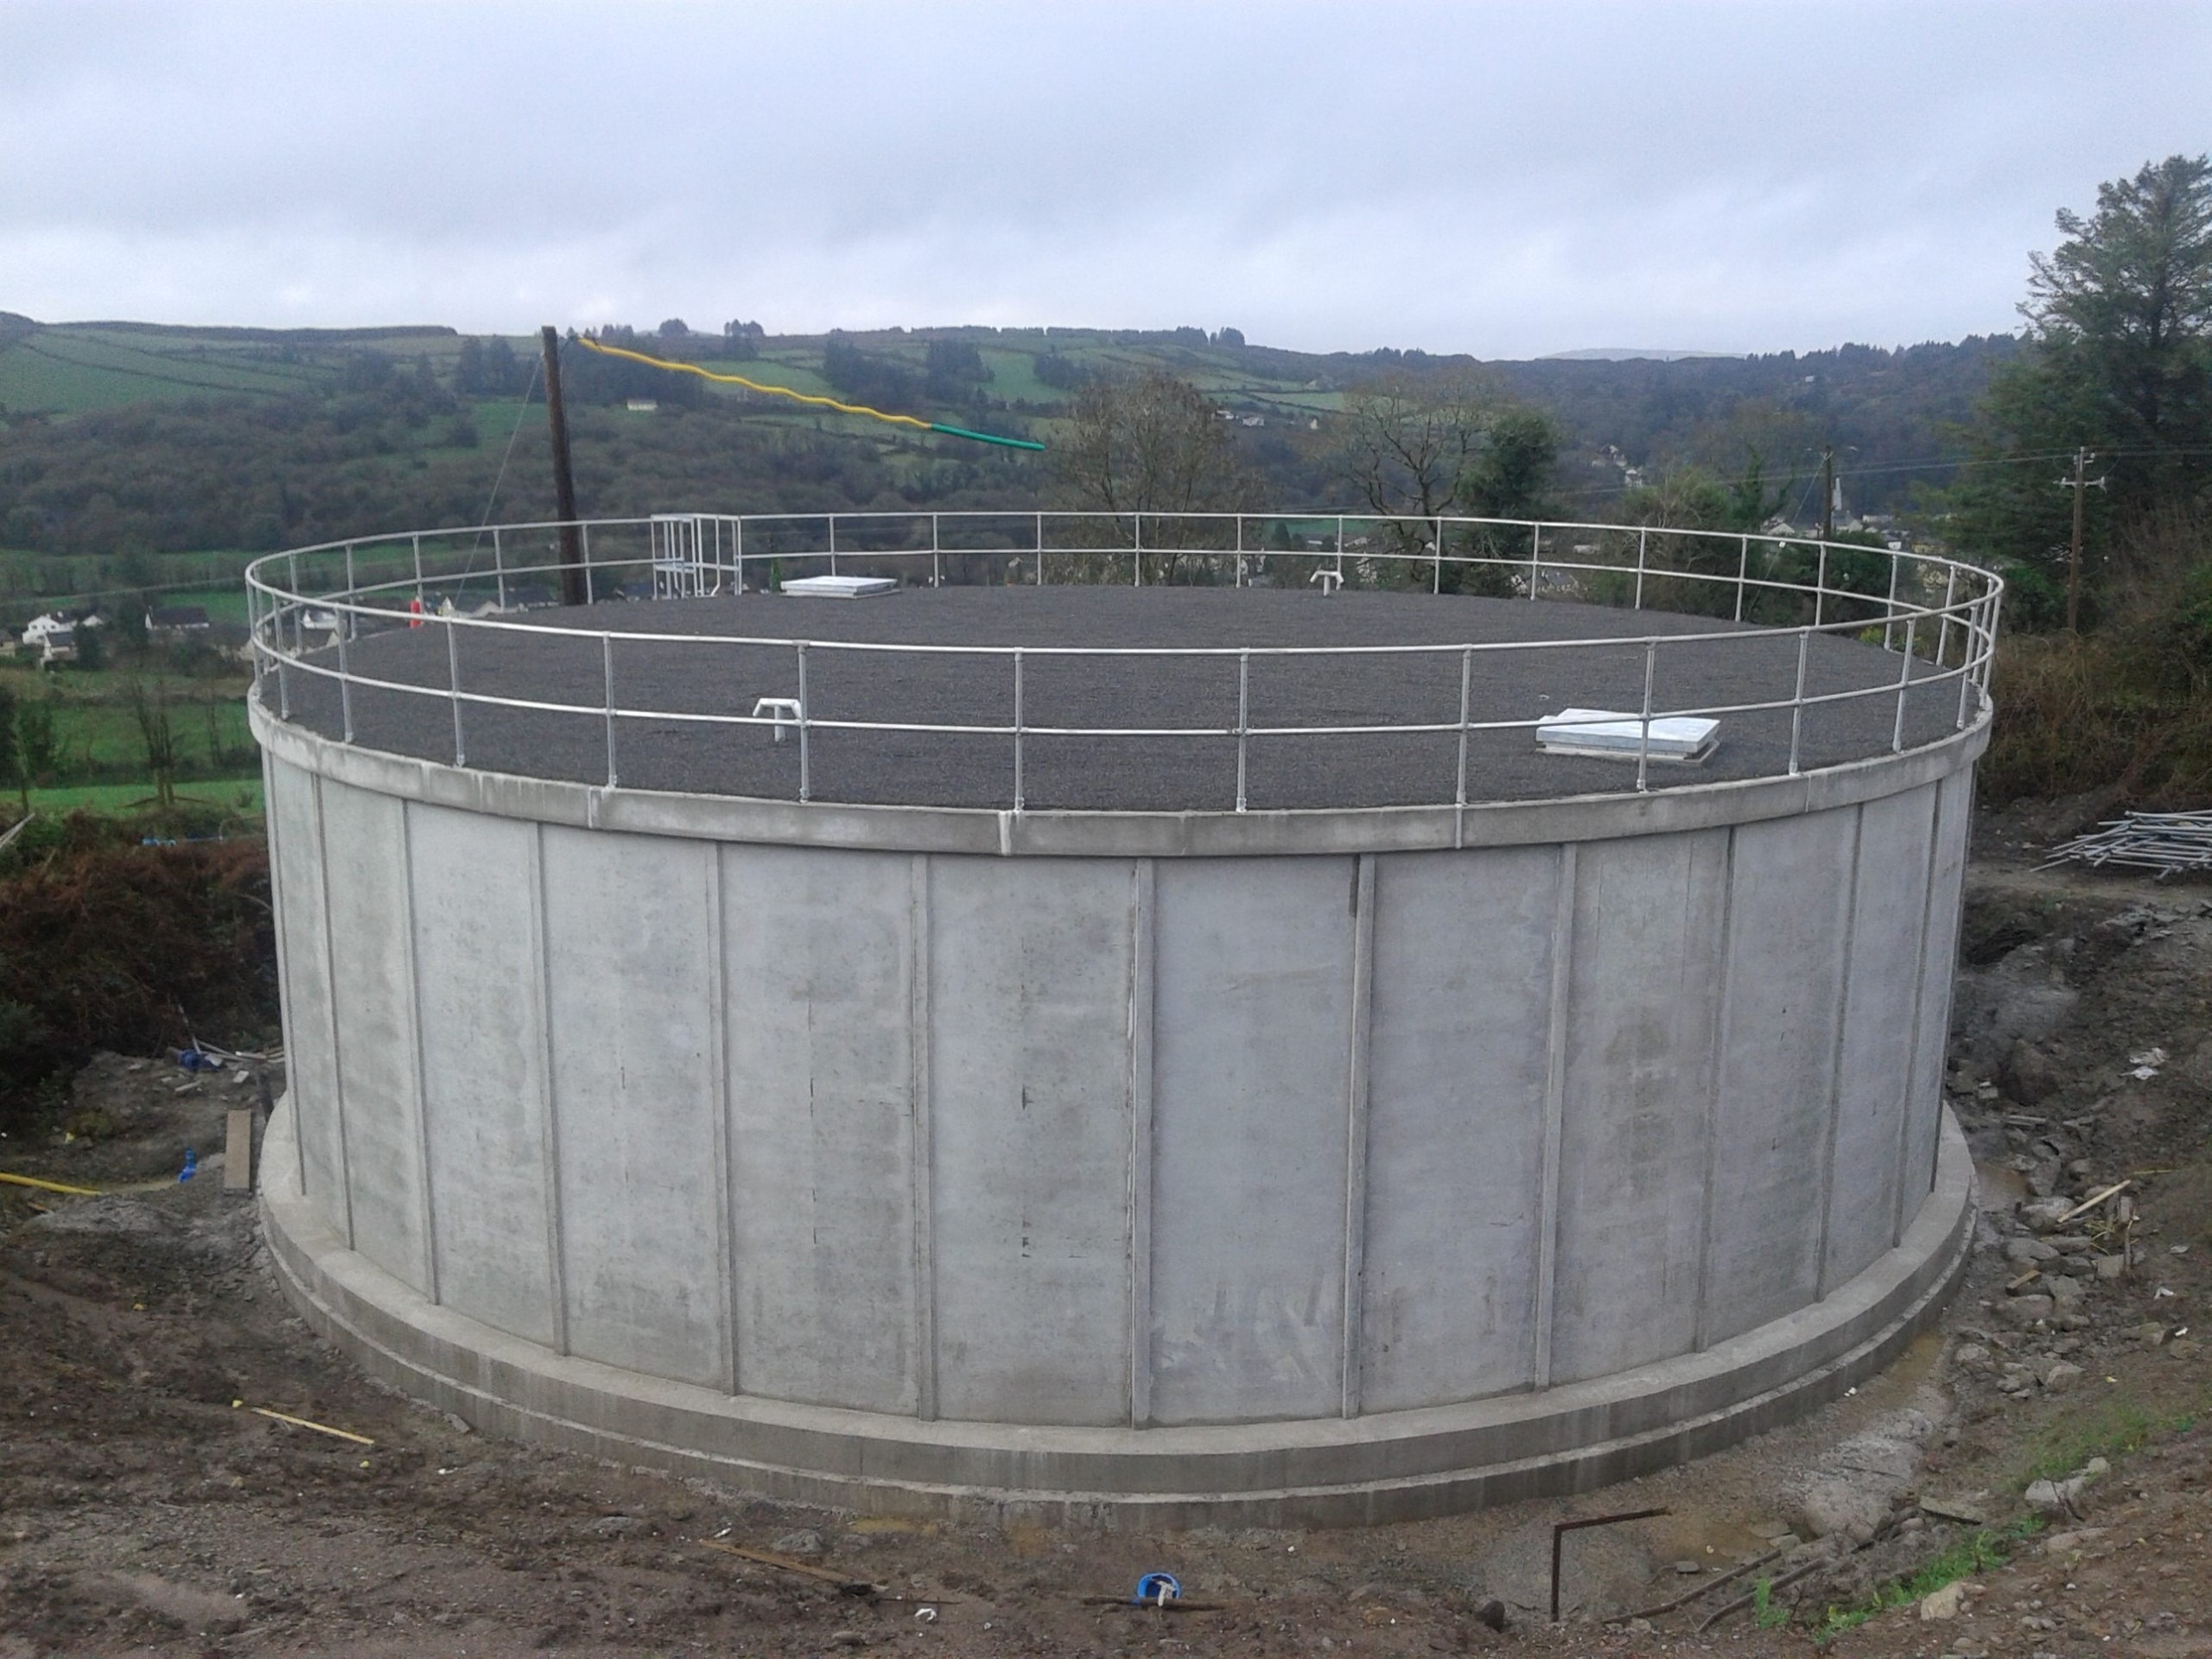 Concrete Storage Tanks Concrete Water Tanks Uk And Ireland